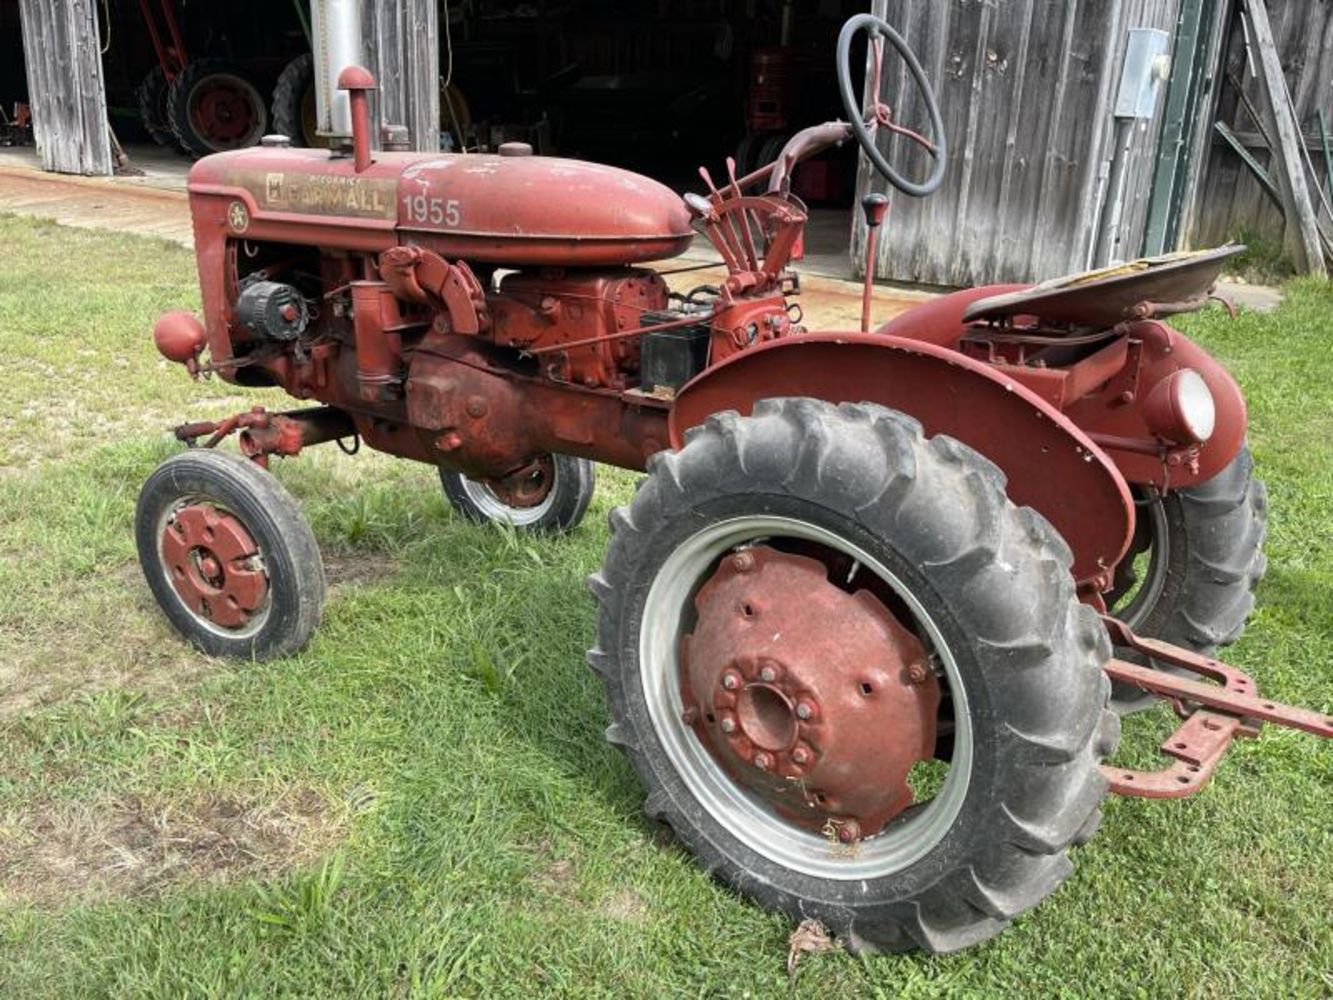 Antique / Collectible Tractors & Wagons & Farm Equipment From Mass Audubon Daniel Webster Sanctuary